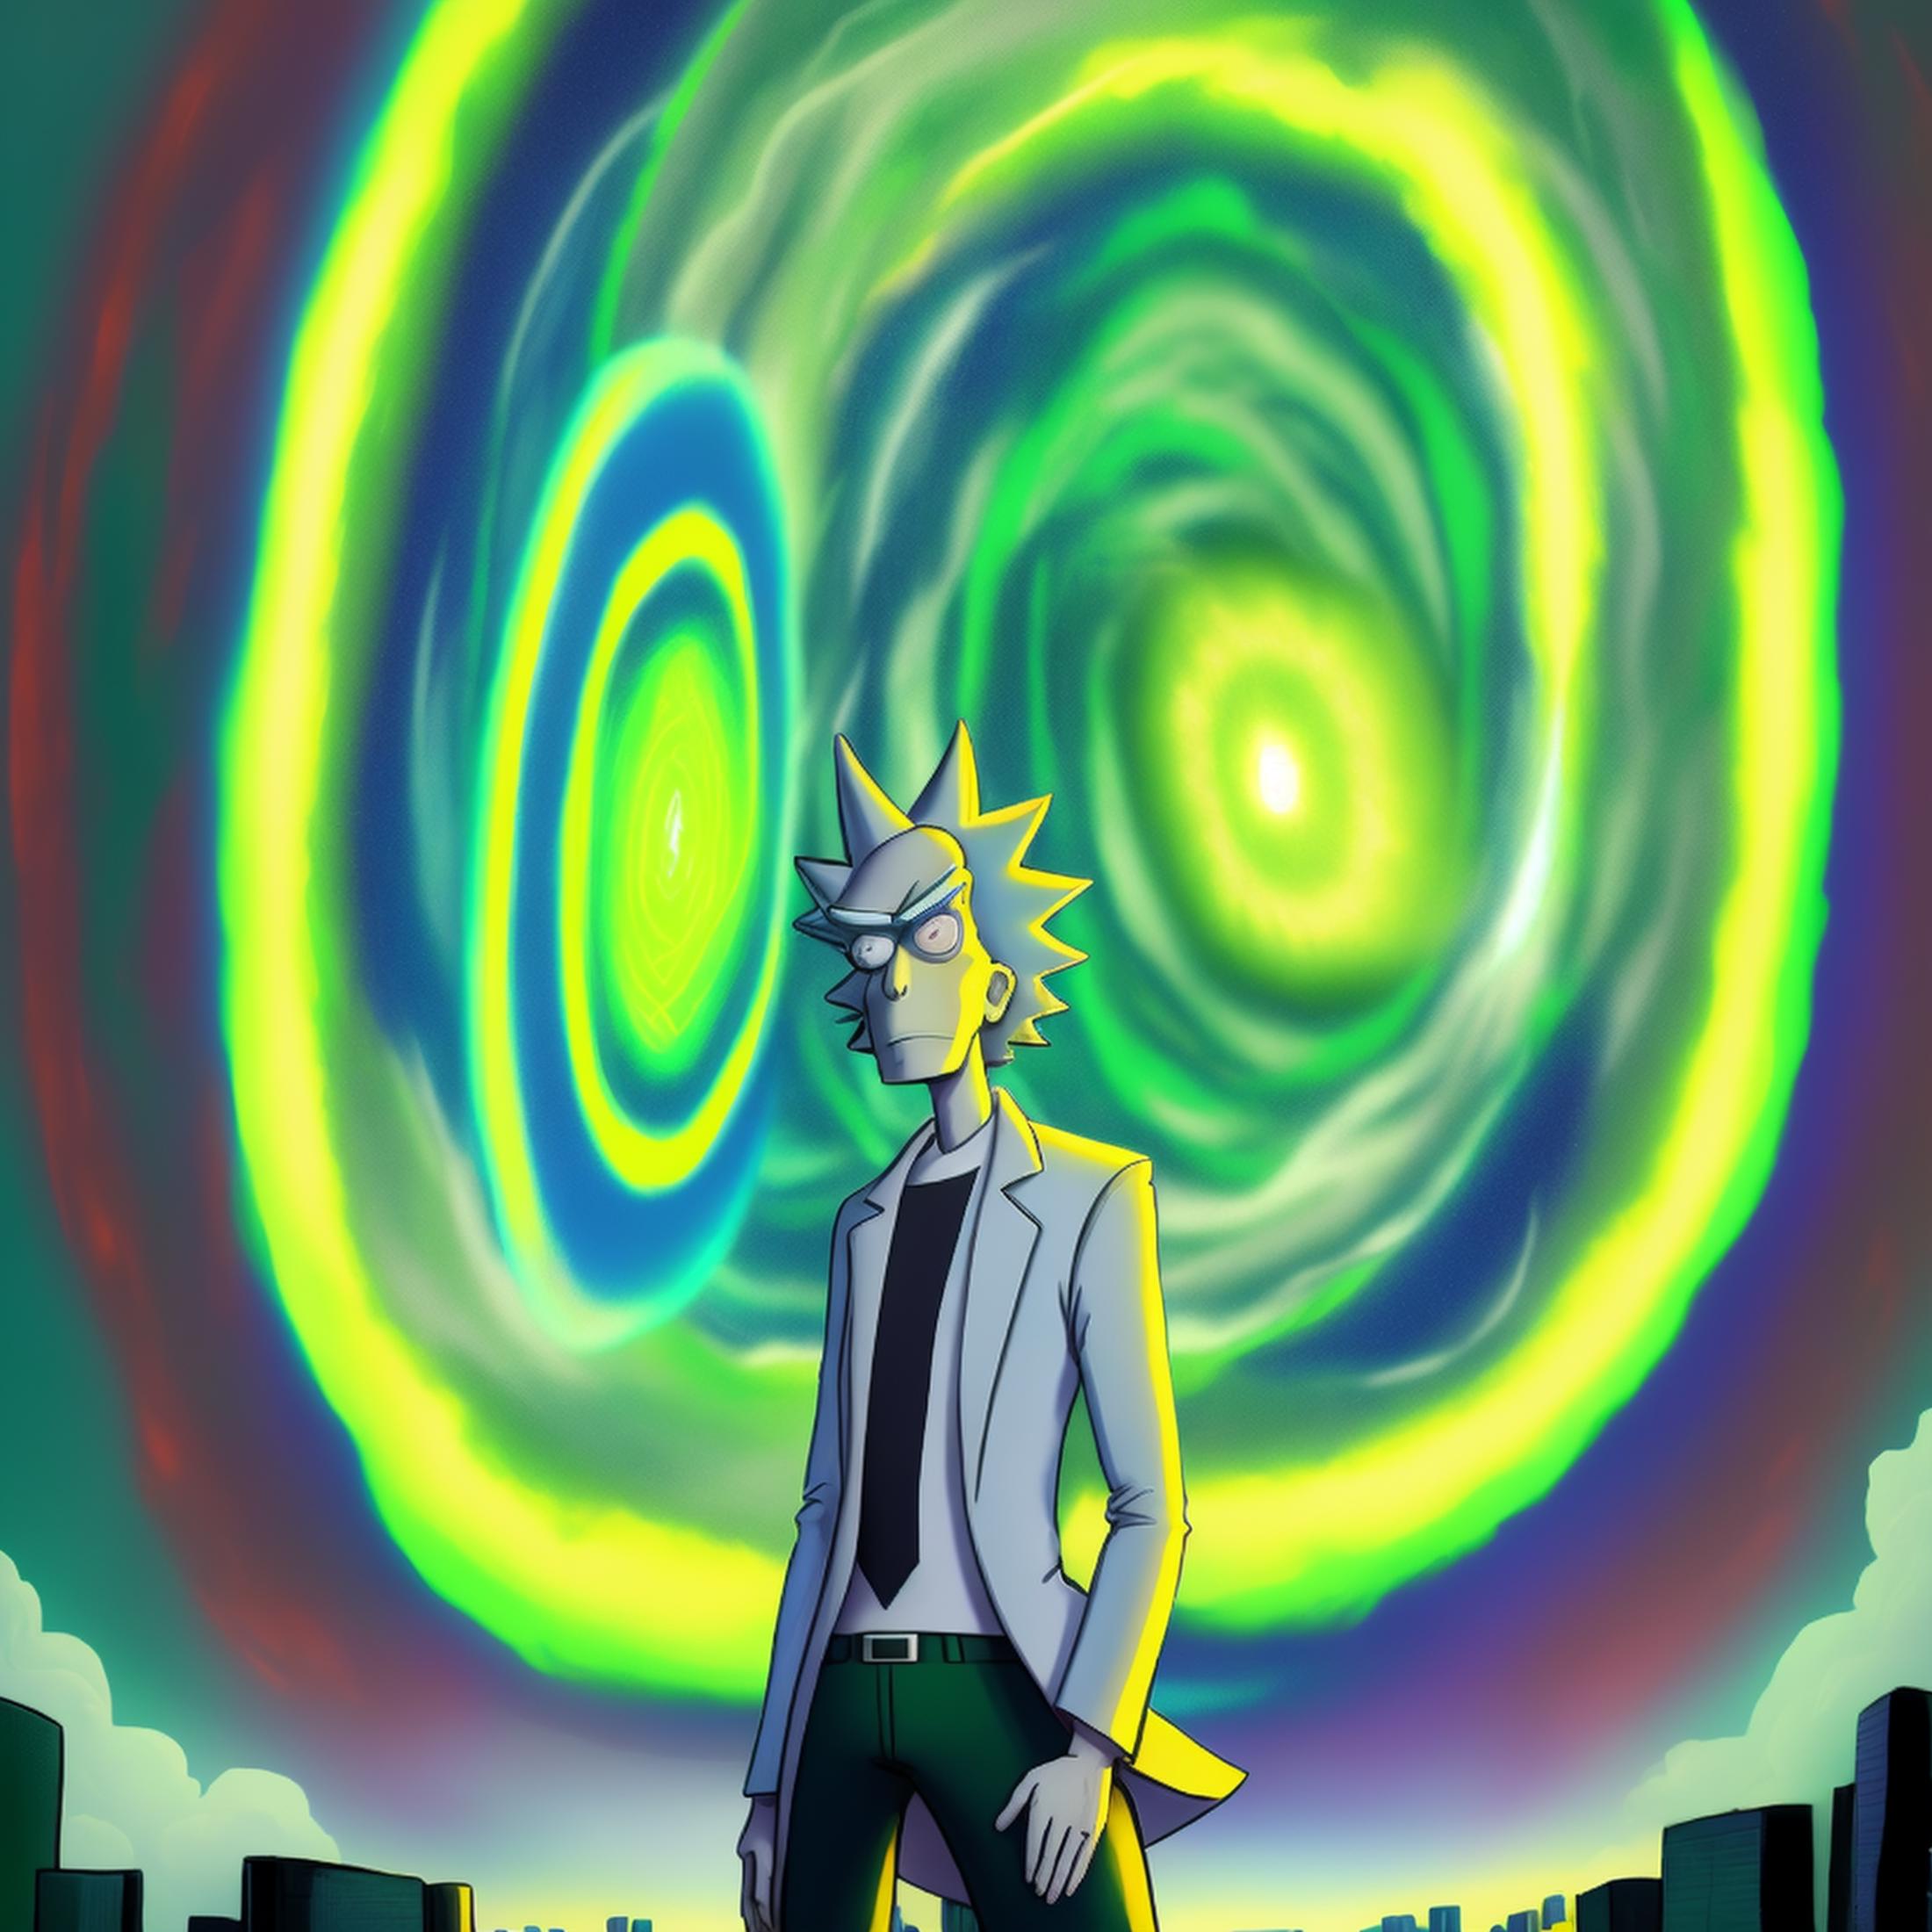 Green Portal (Rick and Morty) image by pusherman